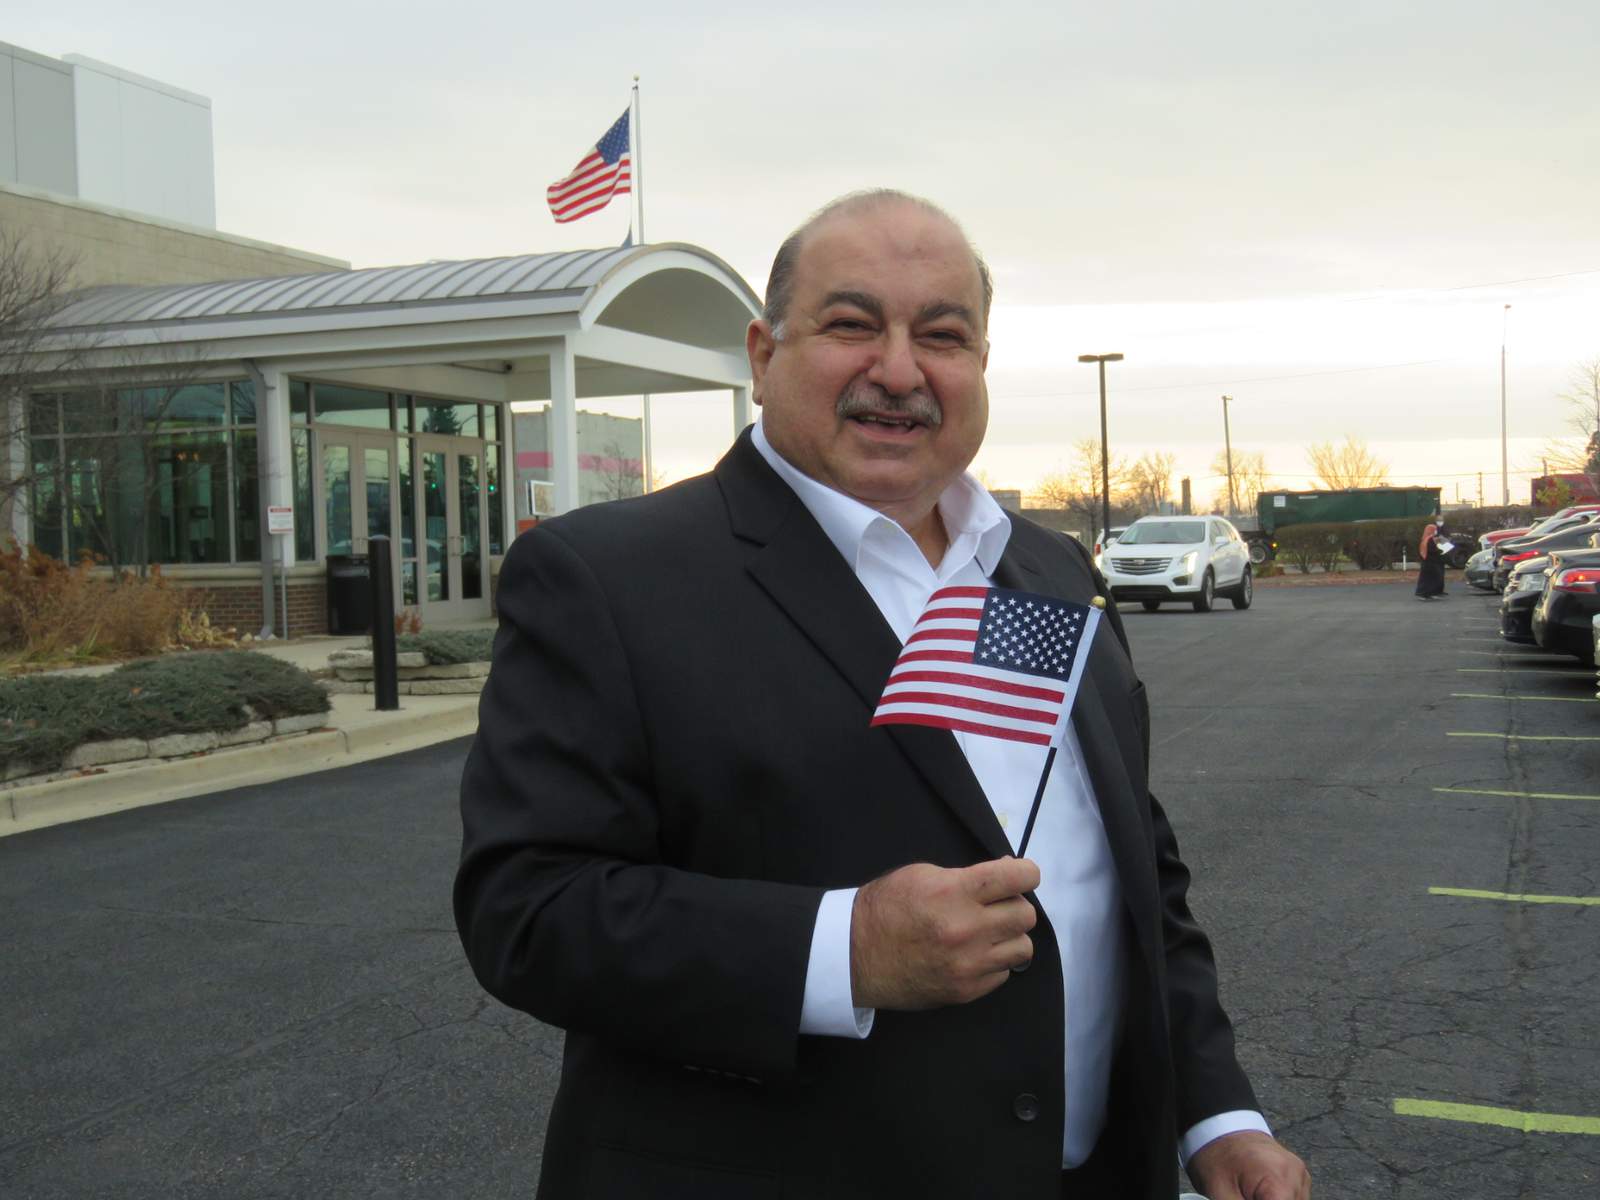 West Bloomfield Iraqi man becomes US citizen after long deportation battle